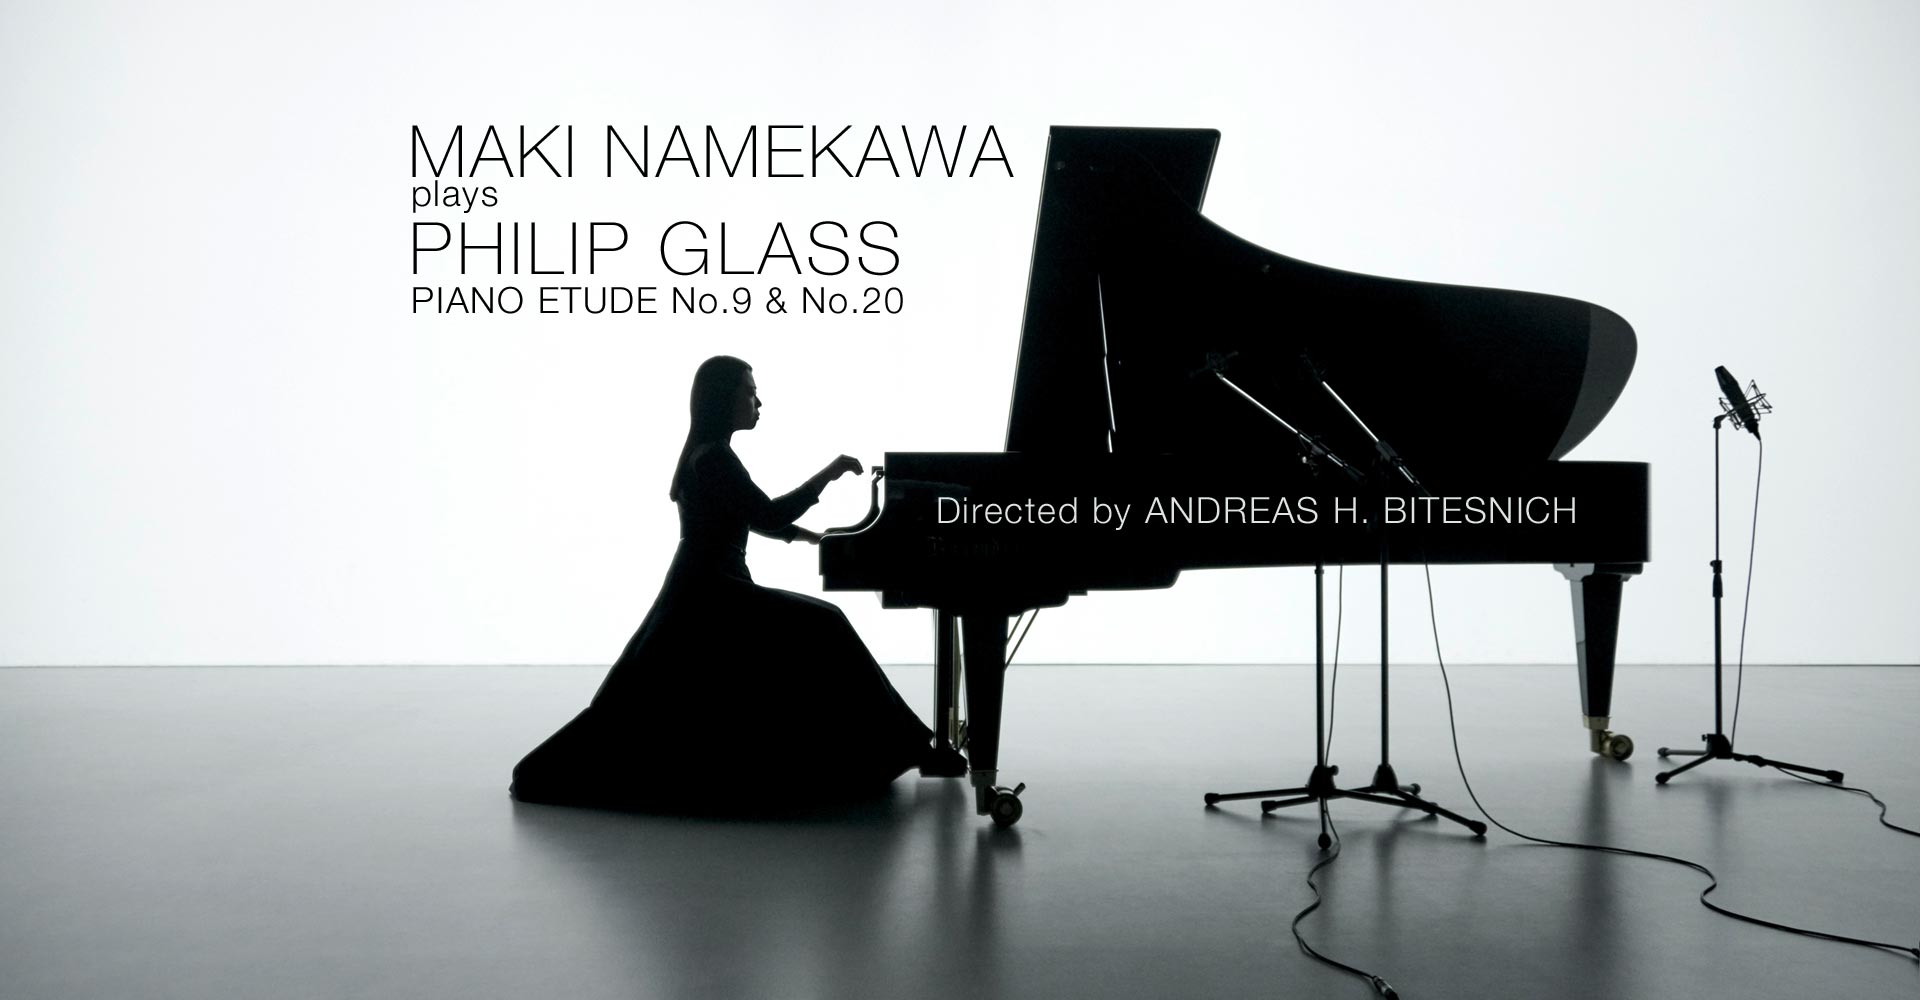 NEW VIDEO MAKI NAMEKAWA PLAYS PHILIP GLASS PIANO ETUDES